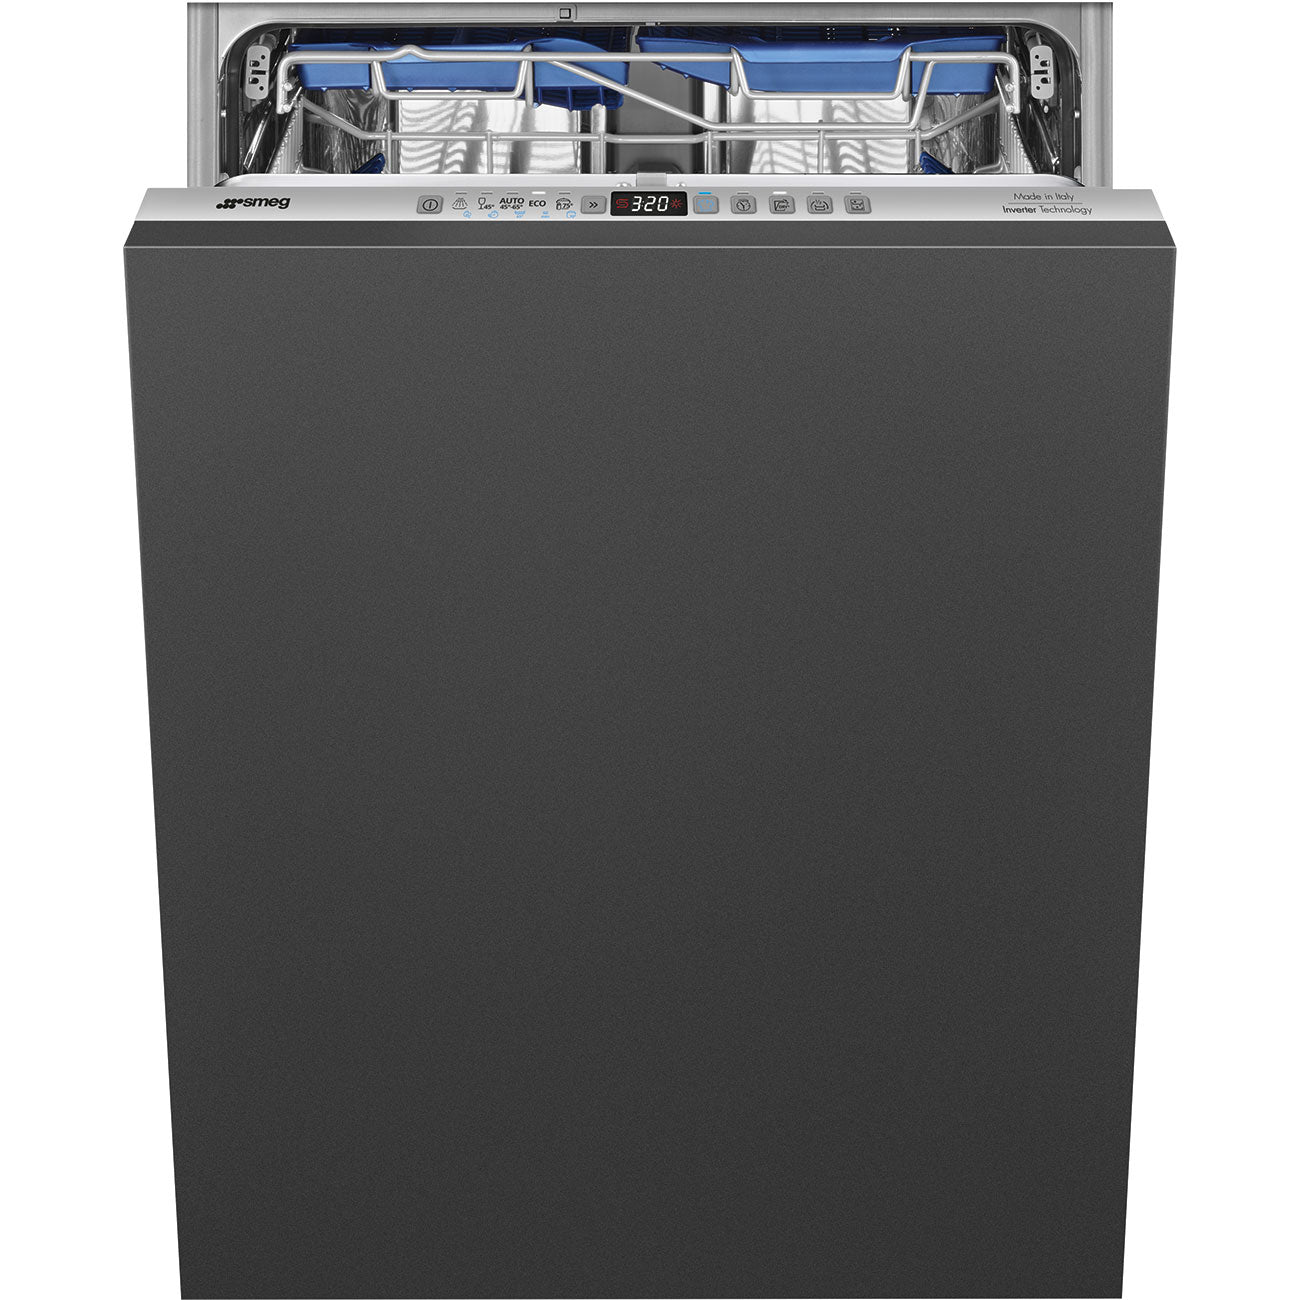 Máquina de lavar louça, Encastre, PRO, 3 cestos, 11 Programas